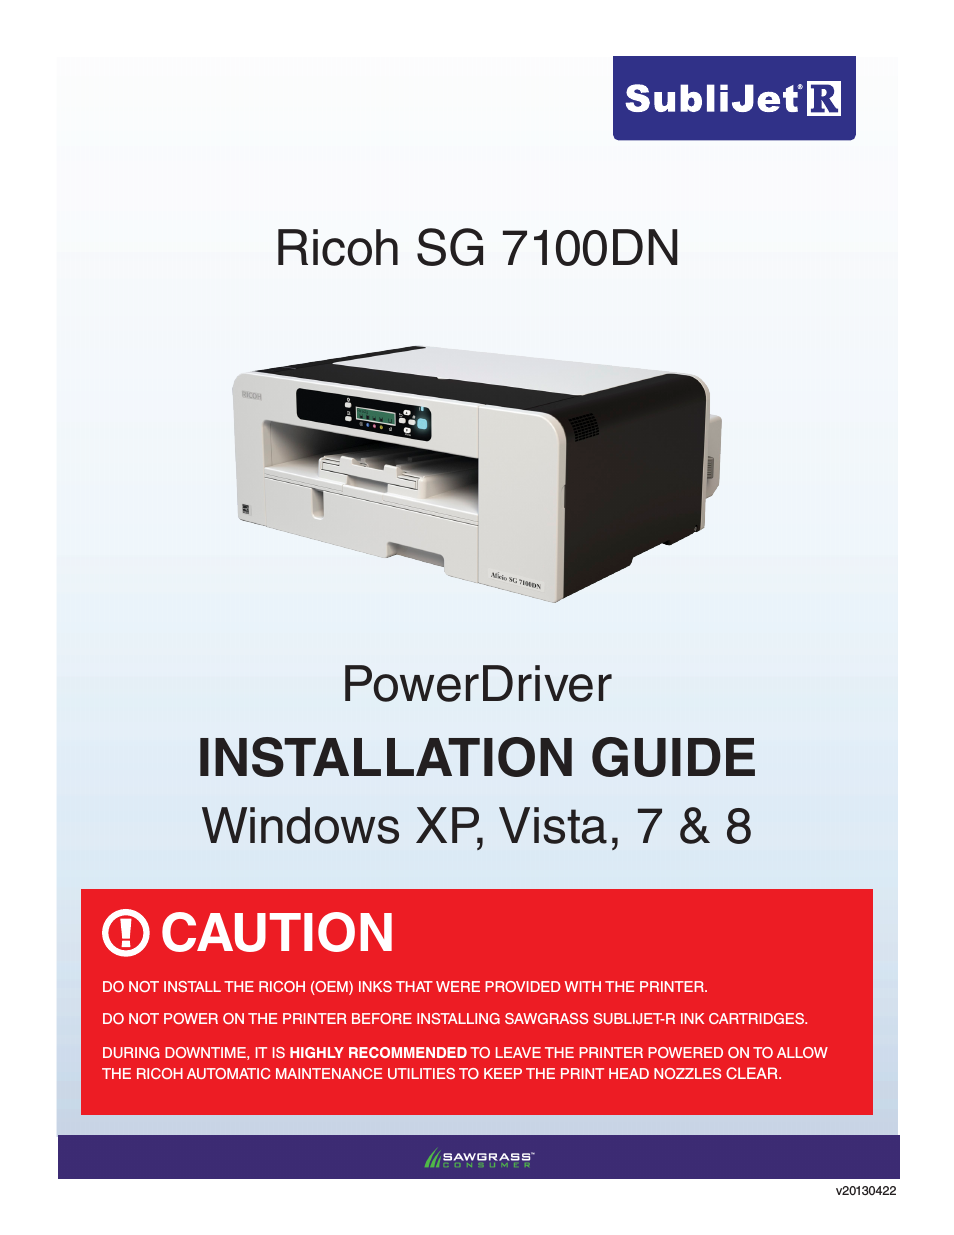 SubliJet R Ricoh SG7100DN (Windows Power Driver Setup): Power Driver Installation Guide